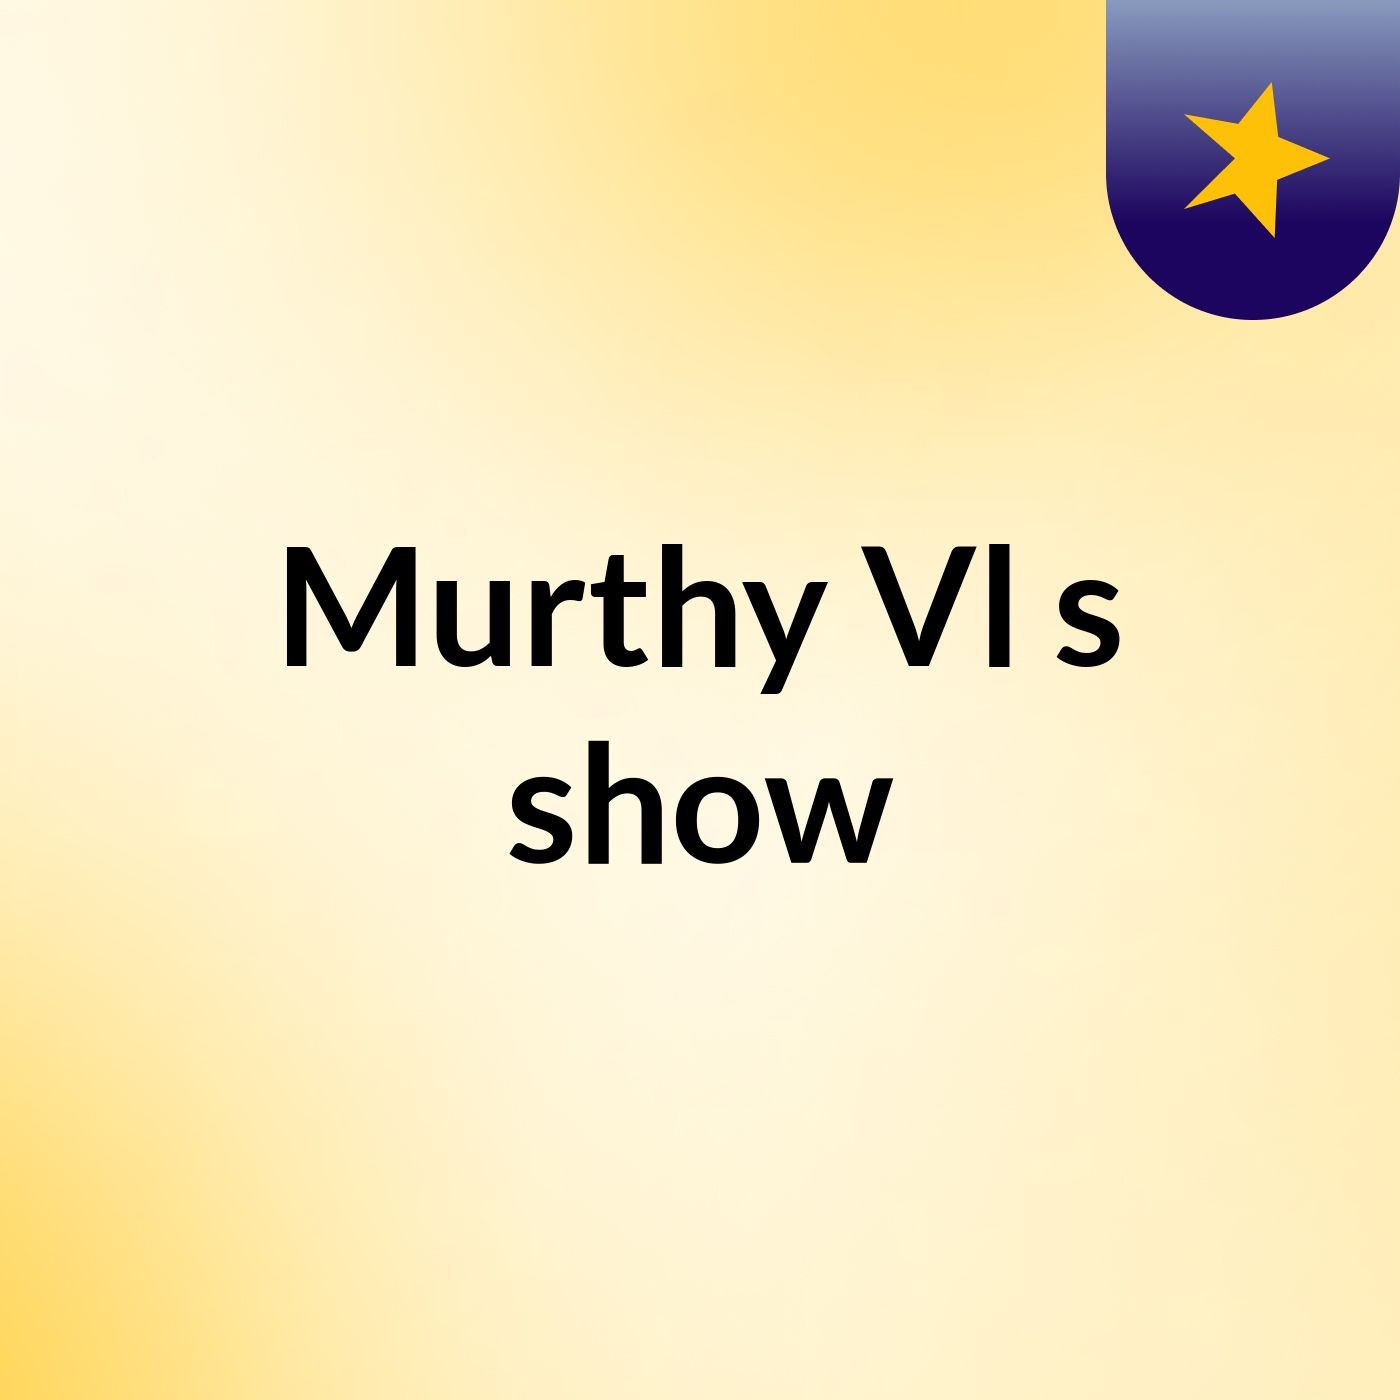 Murthy Vl's show